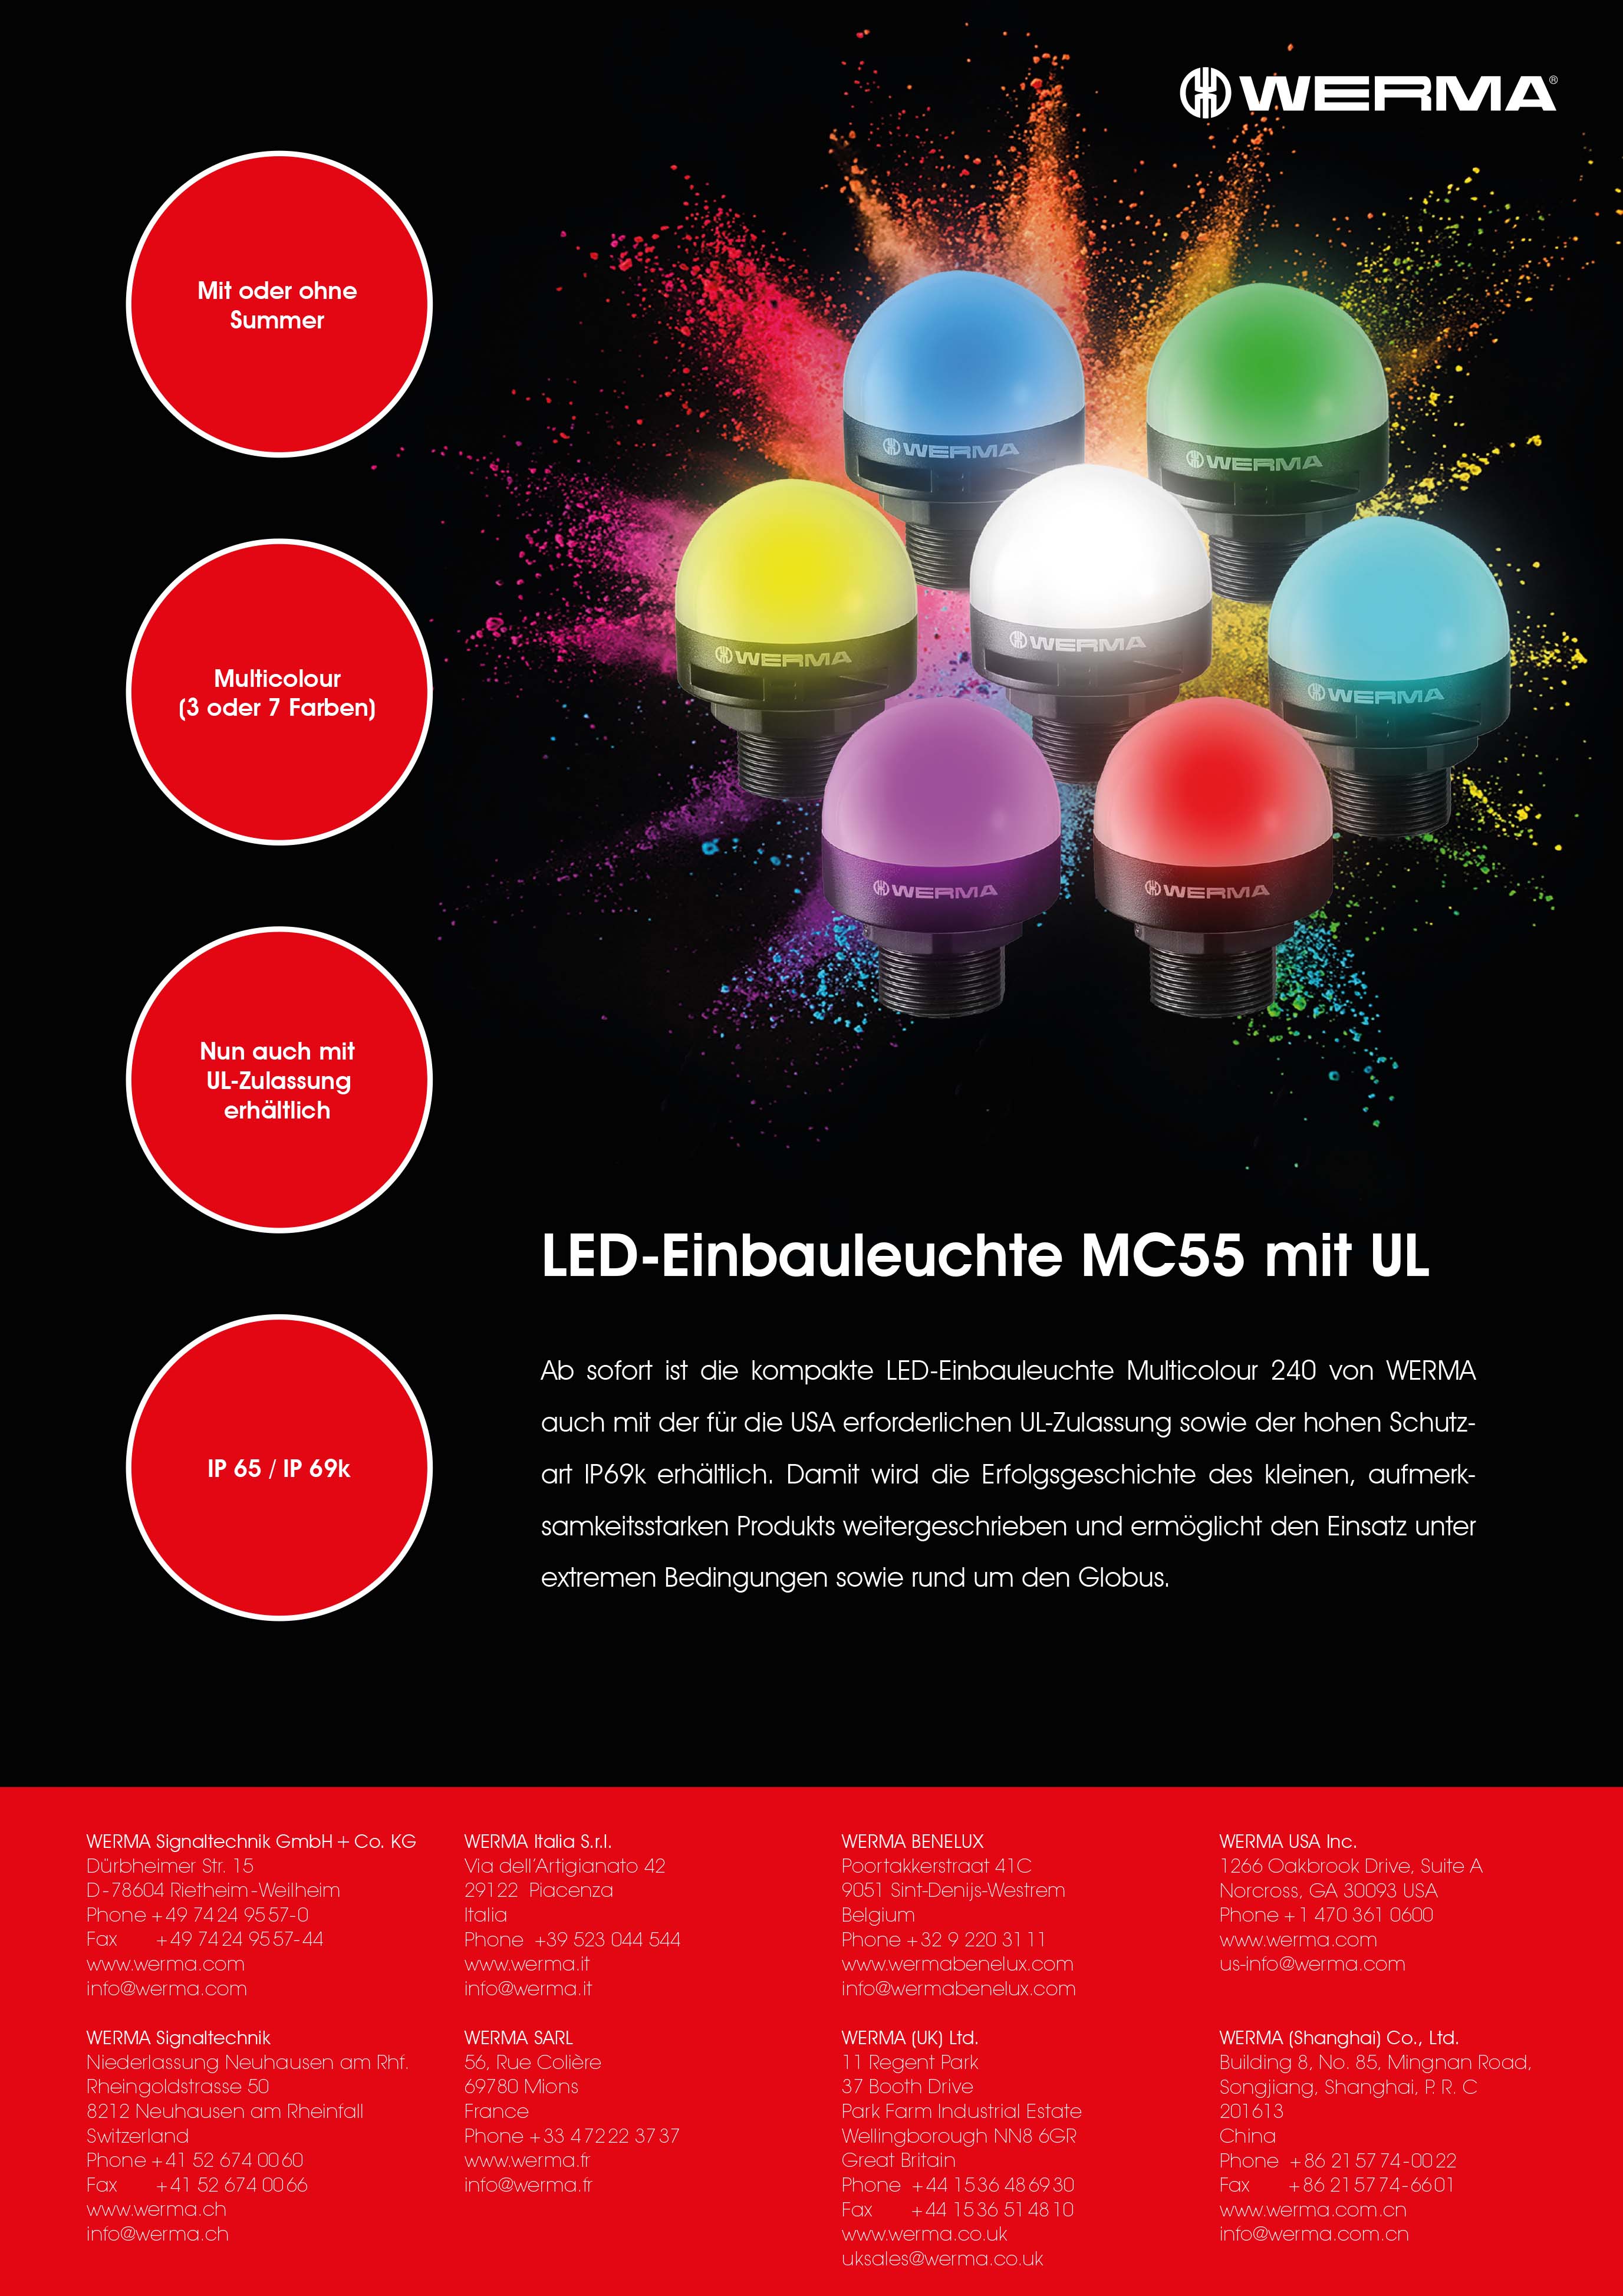 LED-Einbauleuchte MC 55